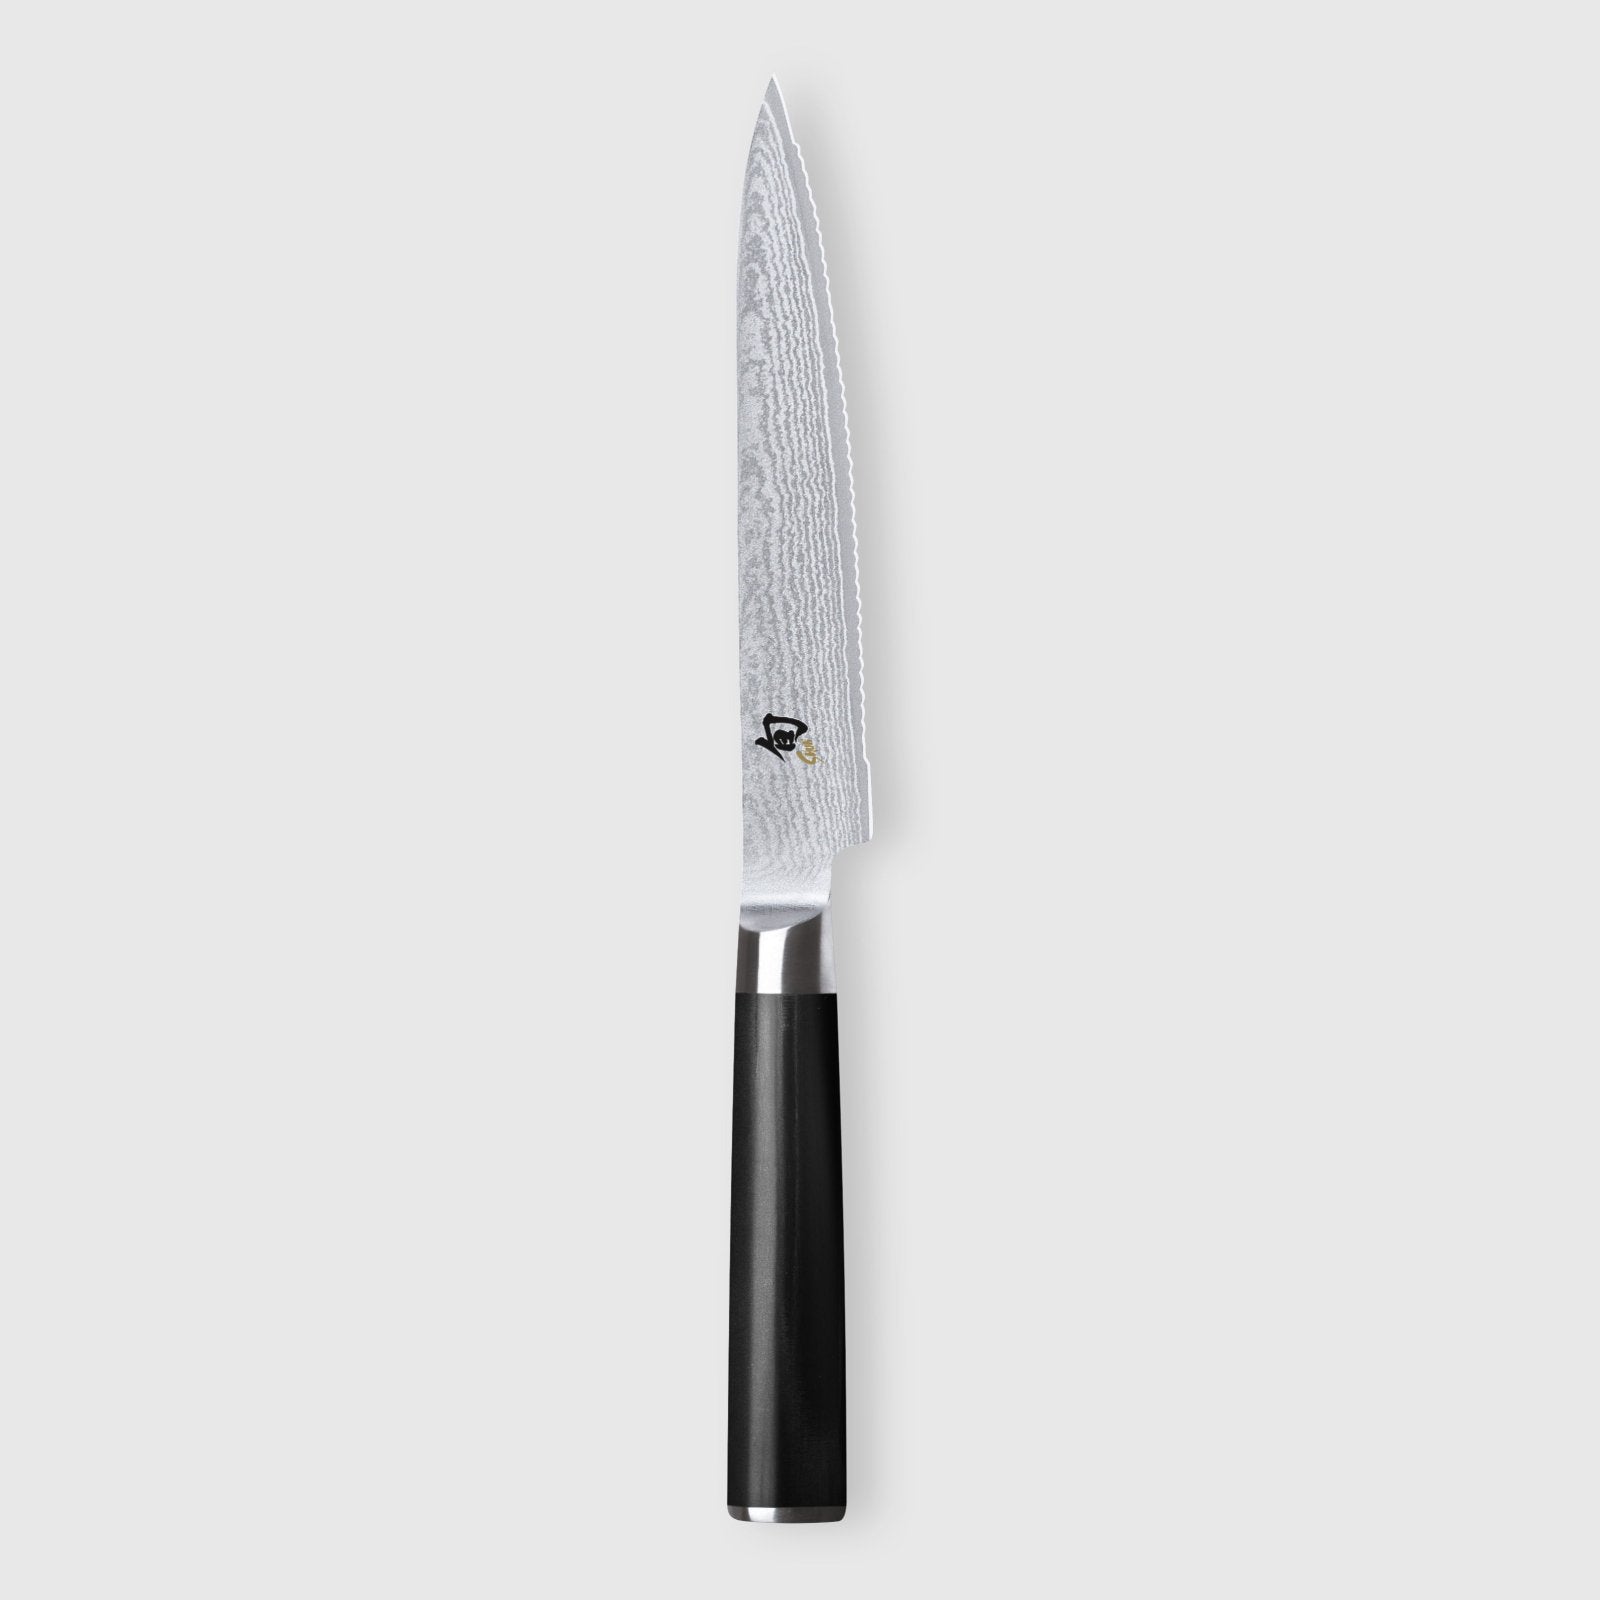 KAI Shun 15cm Serrated Utility Knife - KAI-DM-0722 - The Cotswold Knife Company